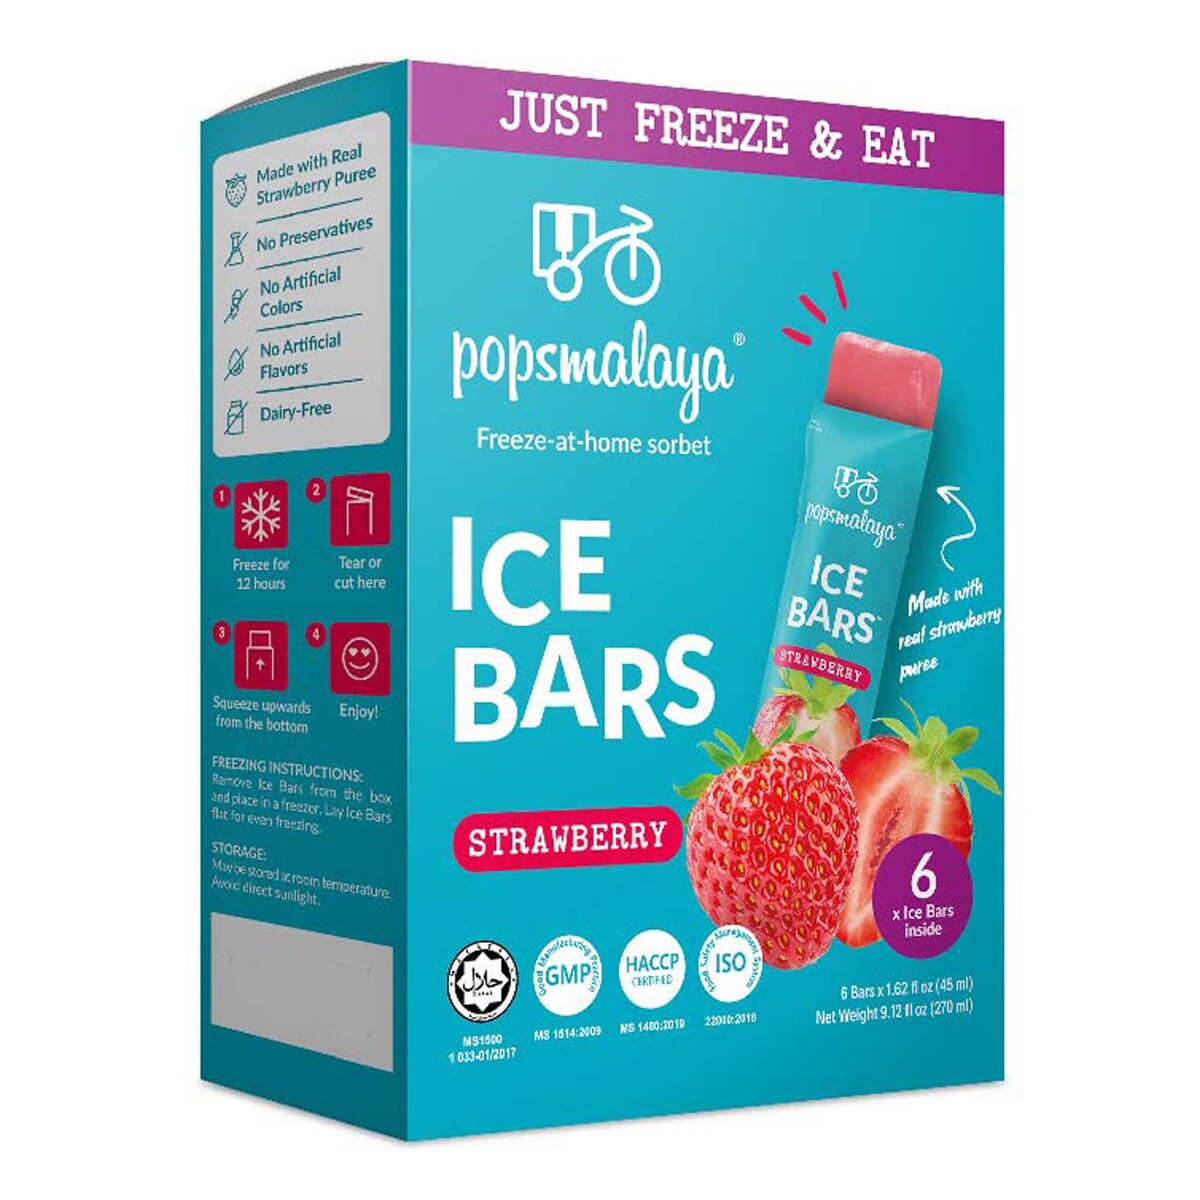 Pops Malaya Ice Bars Strawberry, 6 Pcs, 270 ml